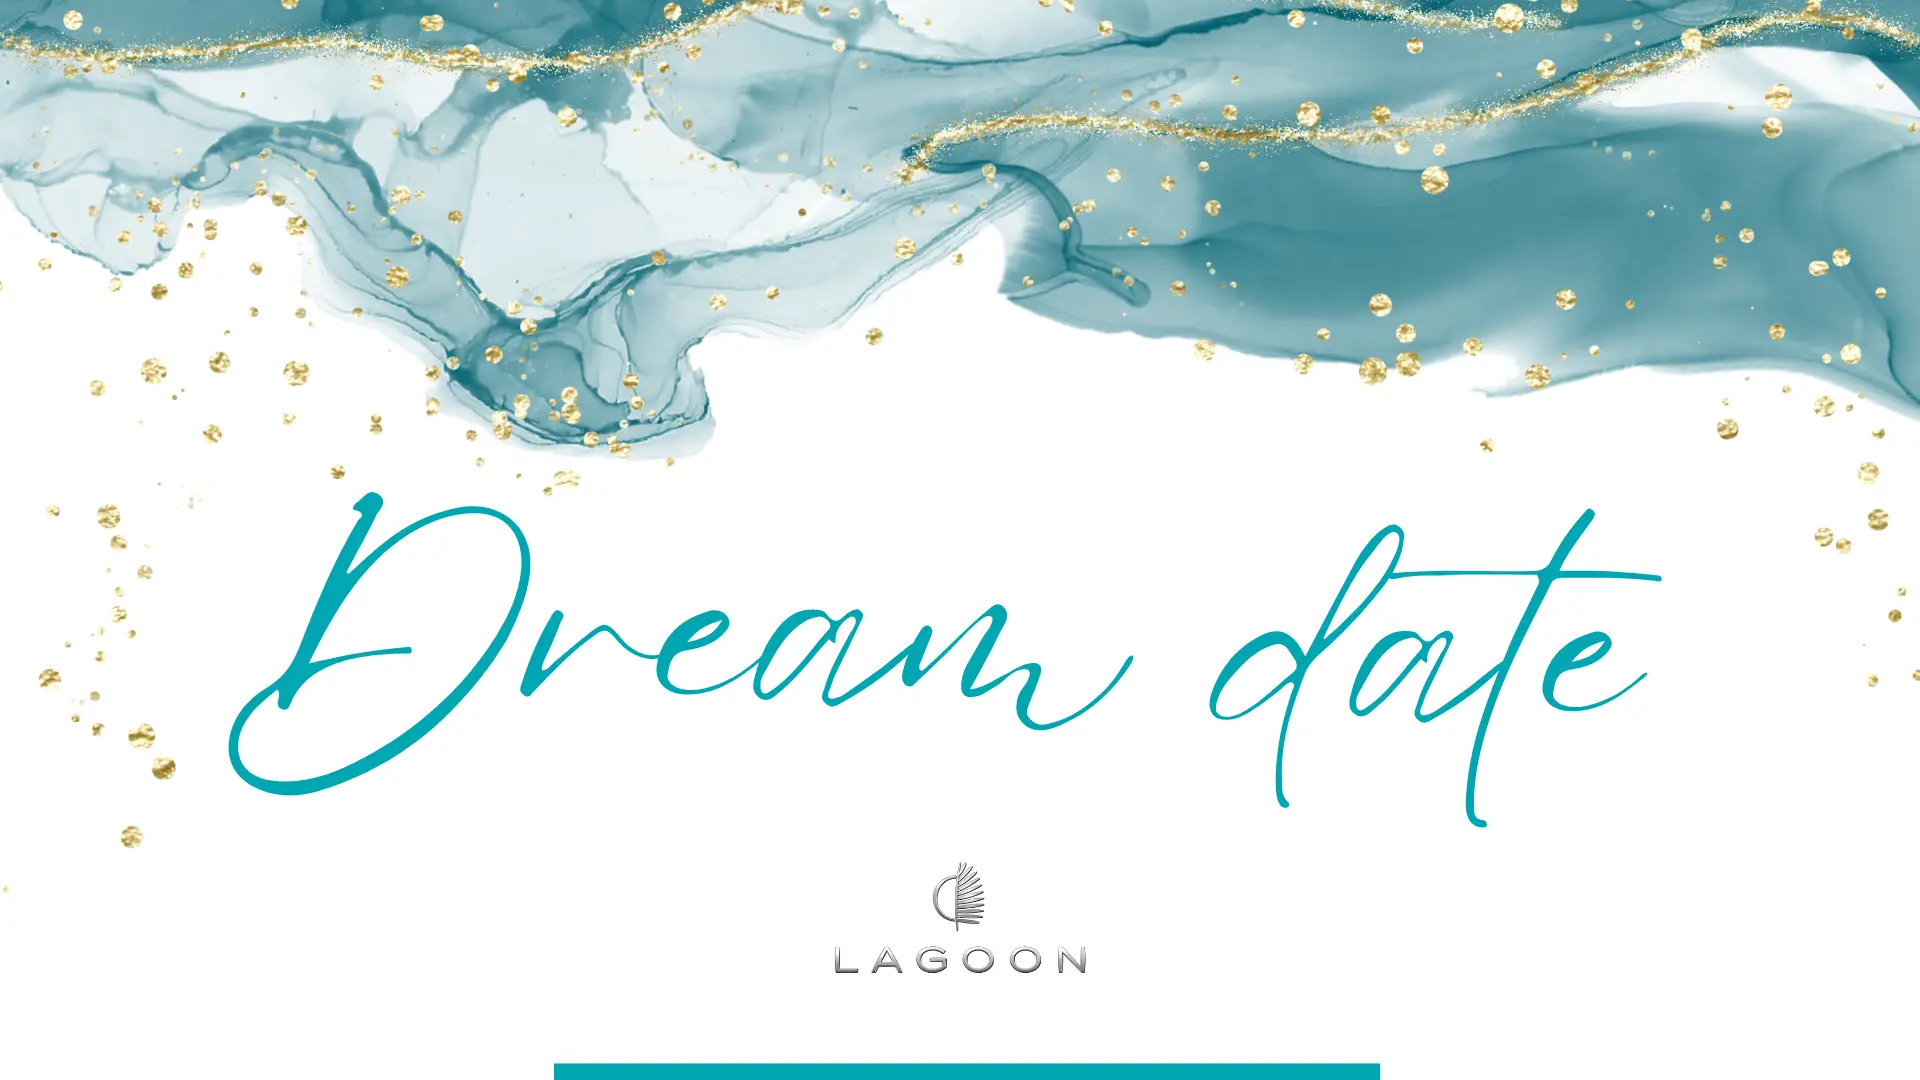 LAgoon dream date